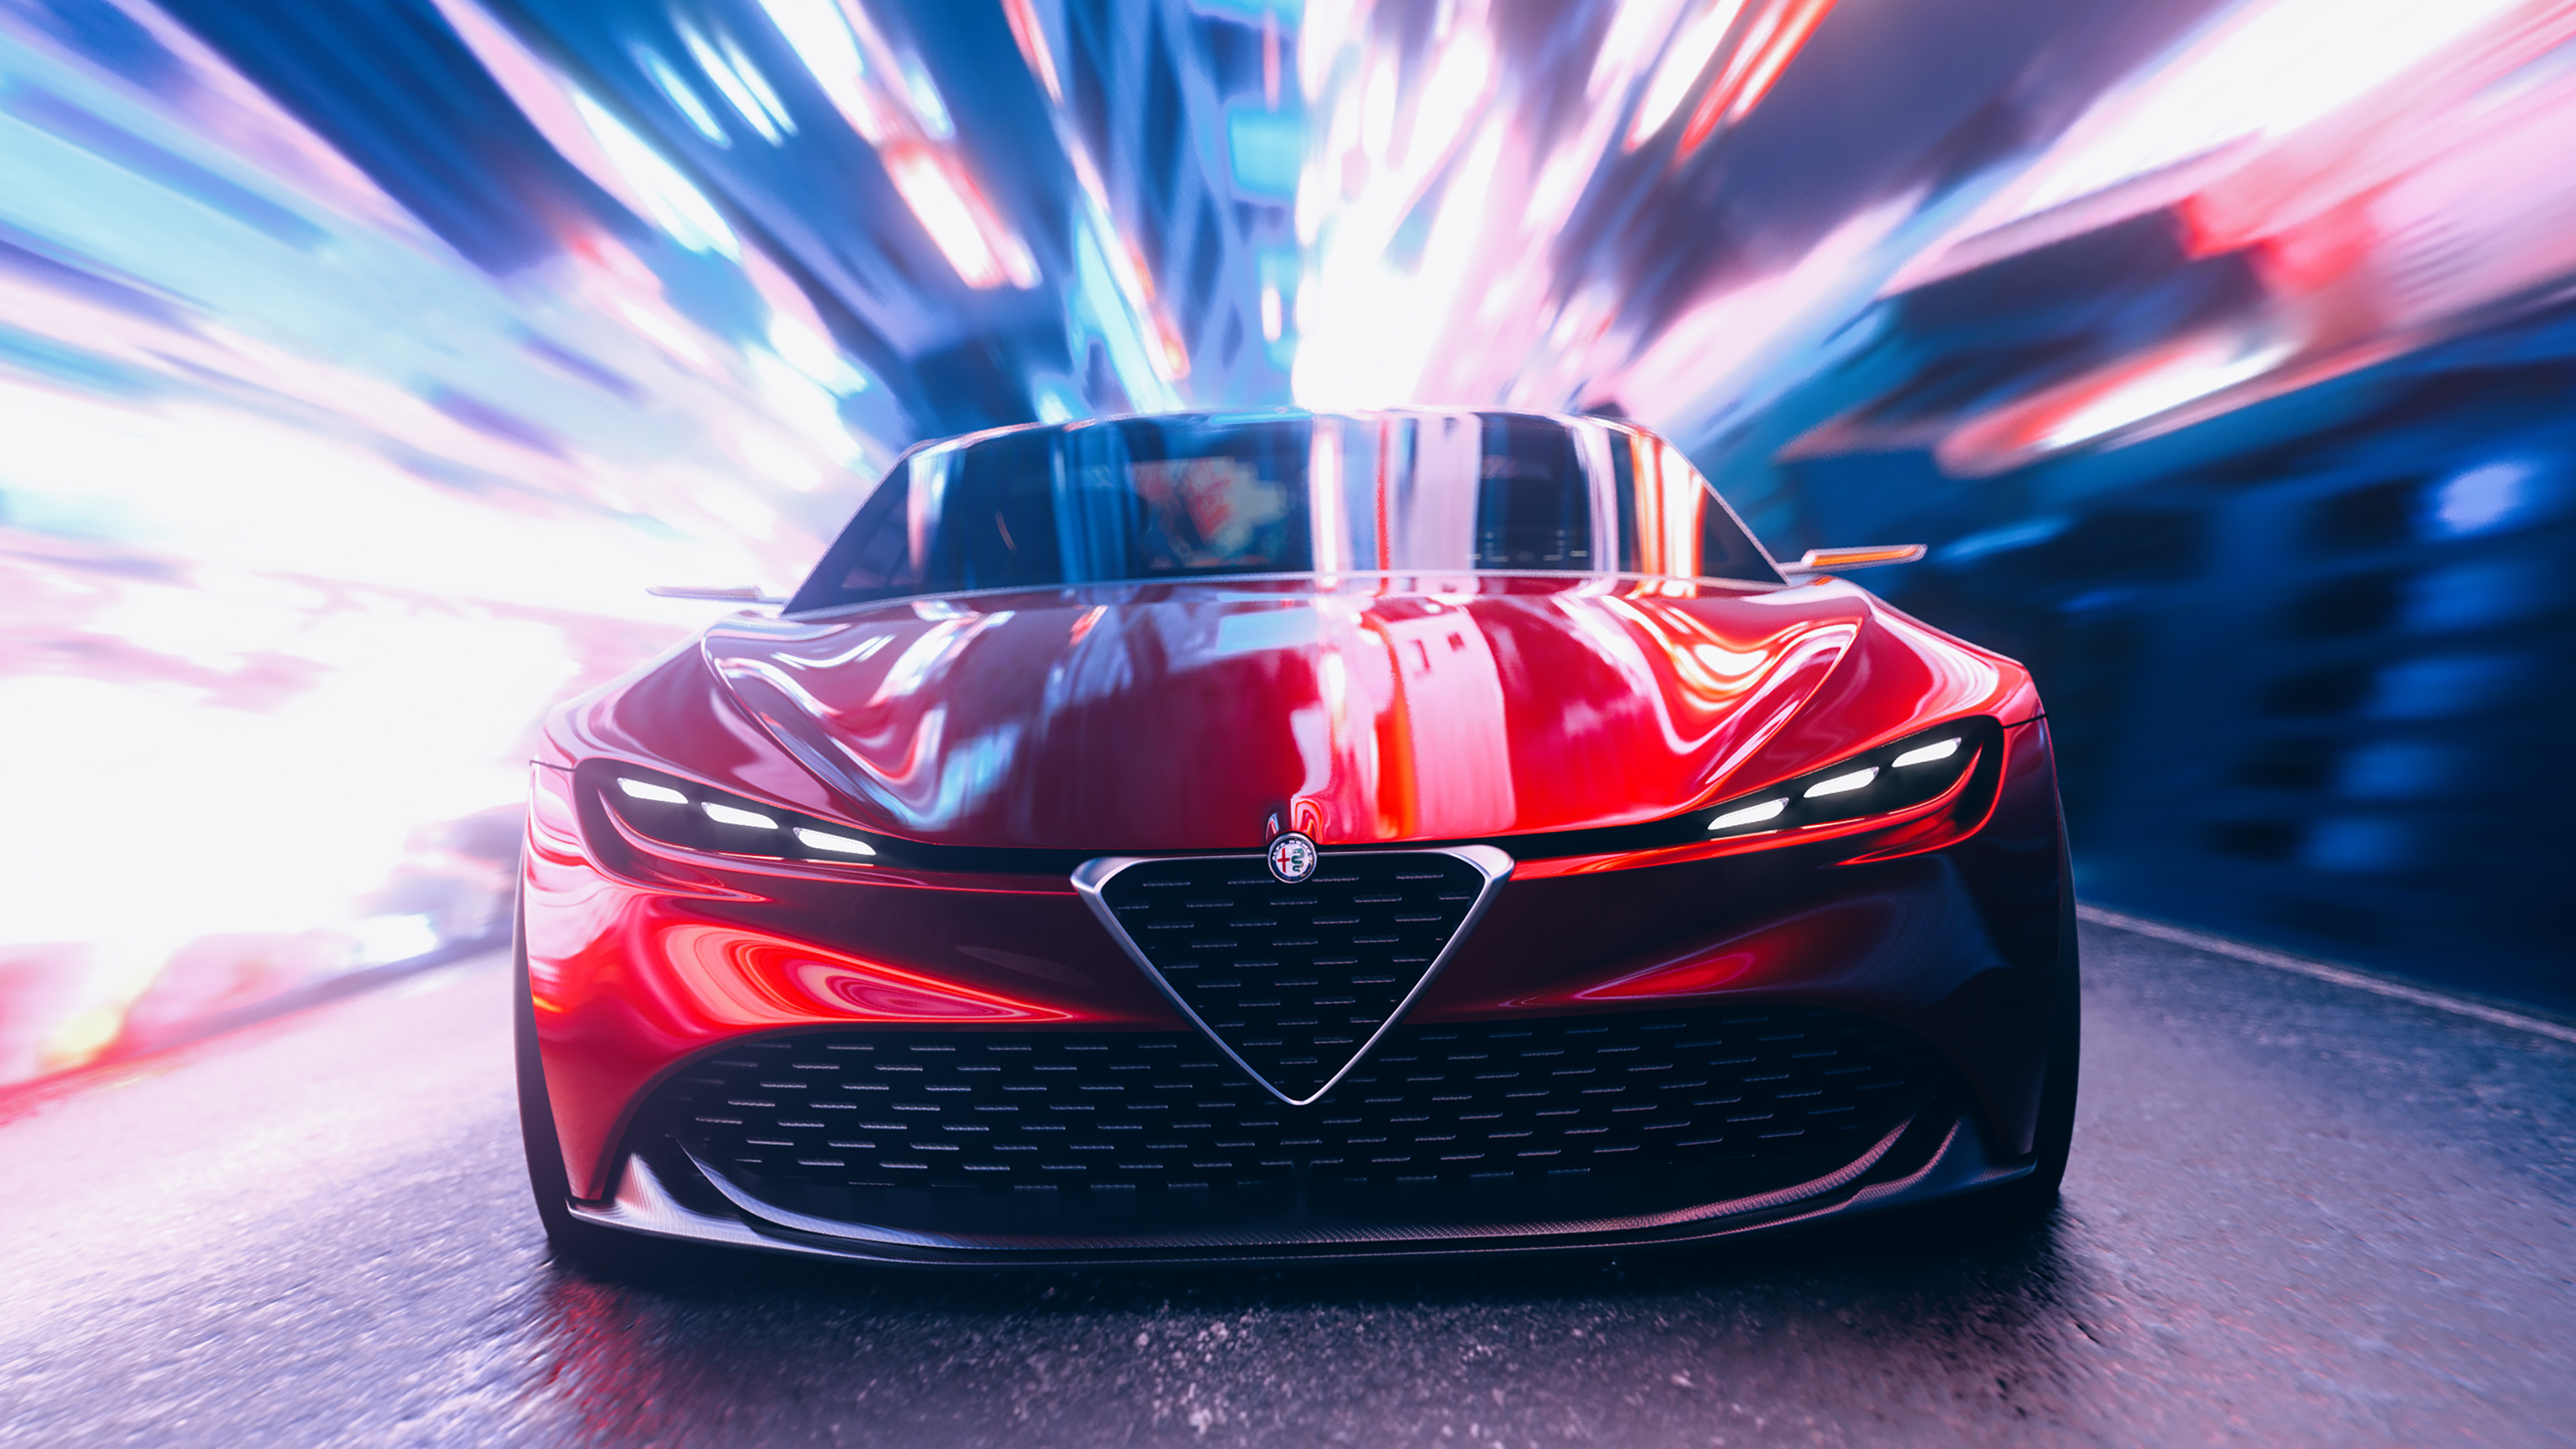 Alfa Romeo Giulia Quadrifoglio 2021 4K 5K HD Cars Wallpapers | HD Wallpapers  | ID #55847